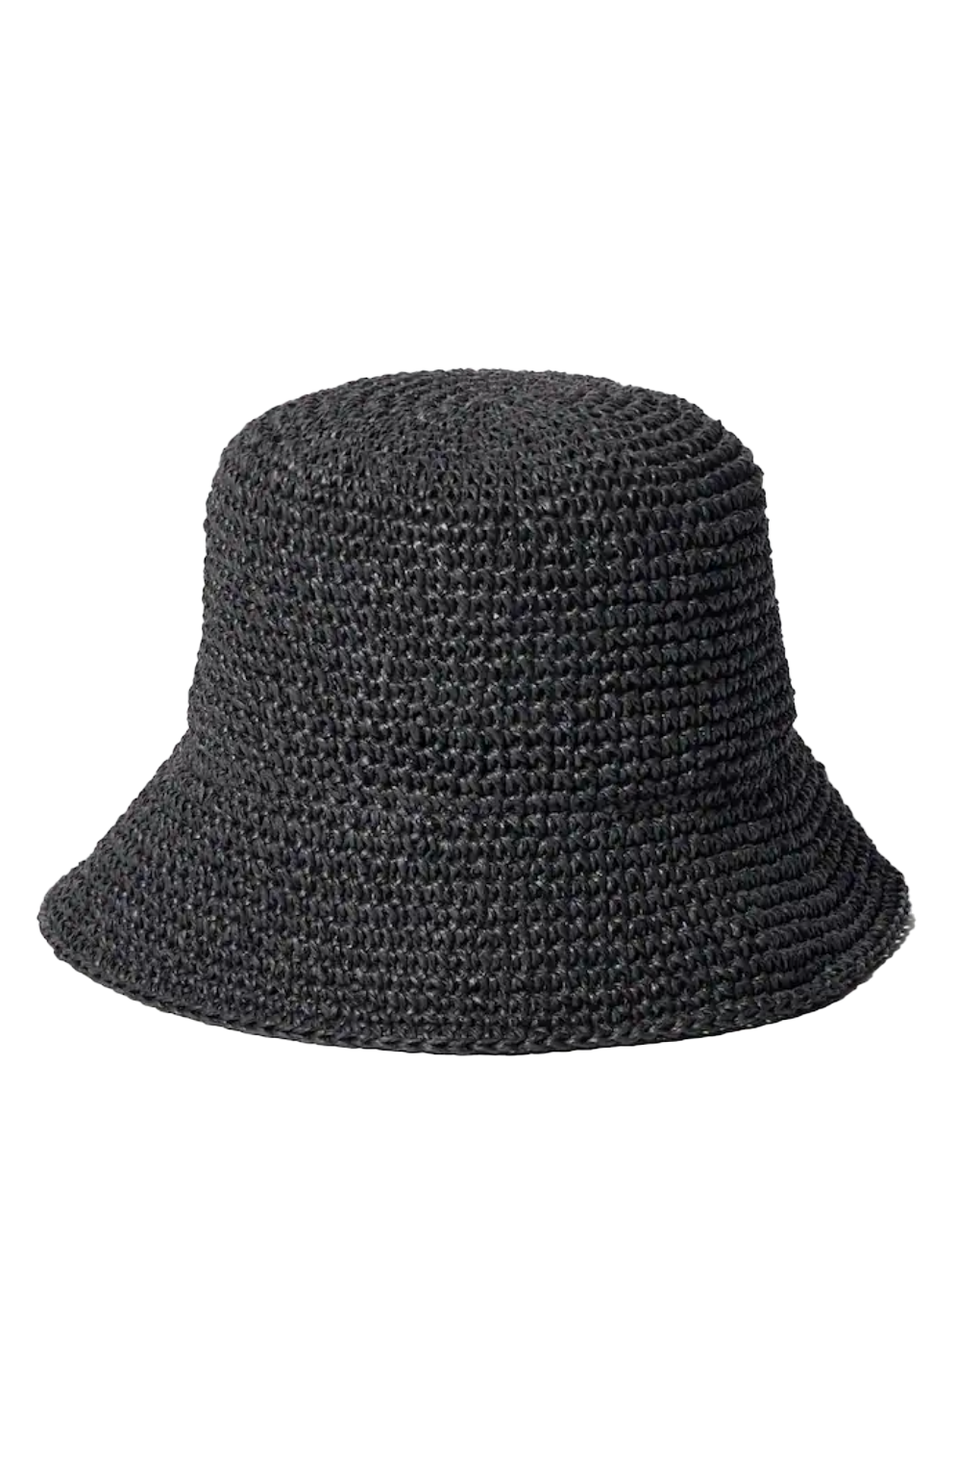 Uniqlo Crochet Hat